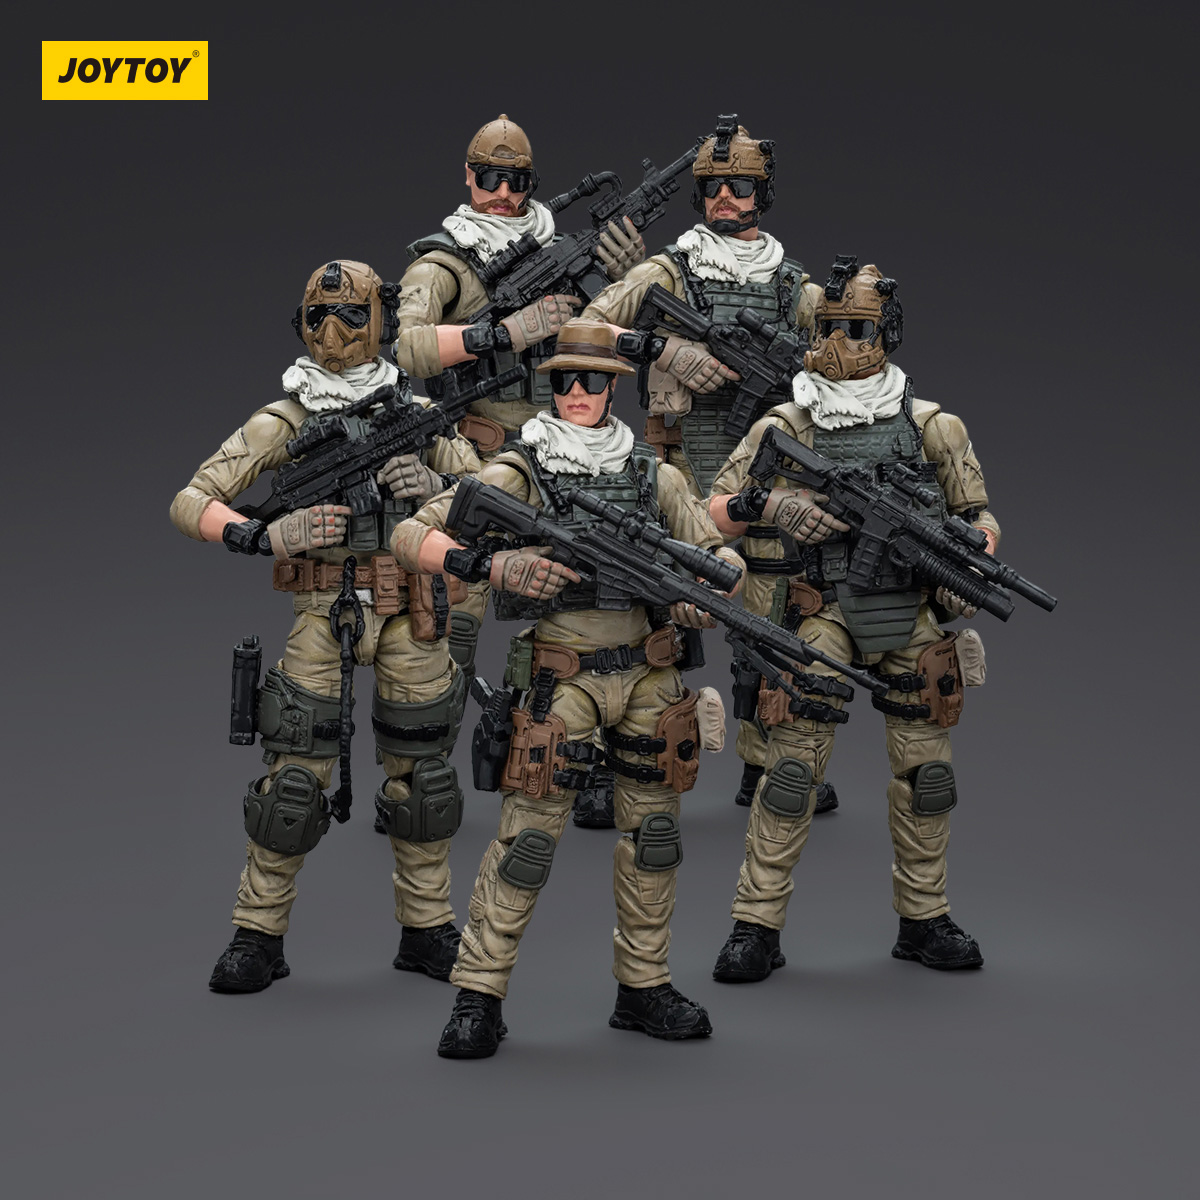 U.S. Army Delta Assault Squad